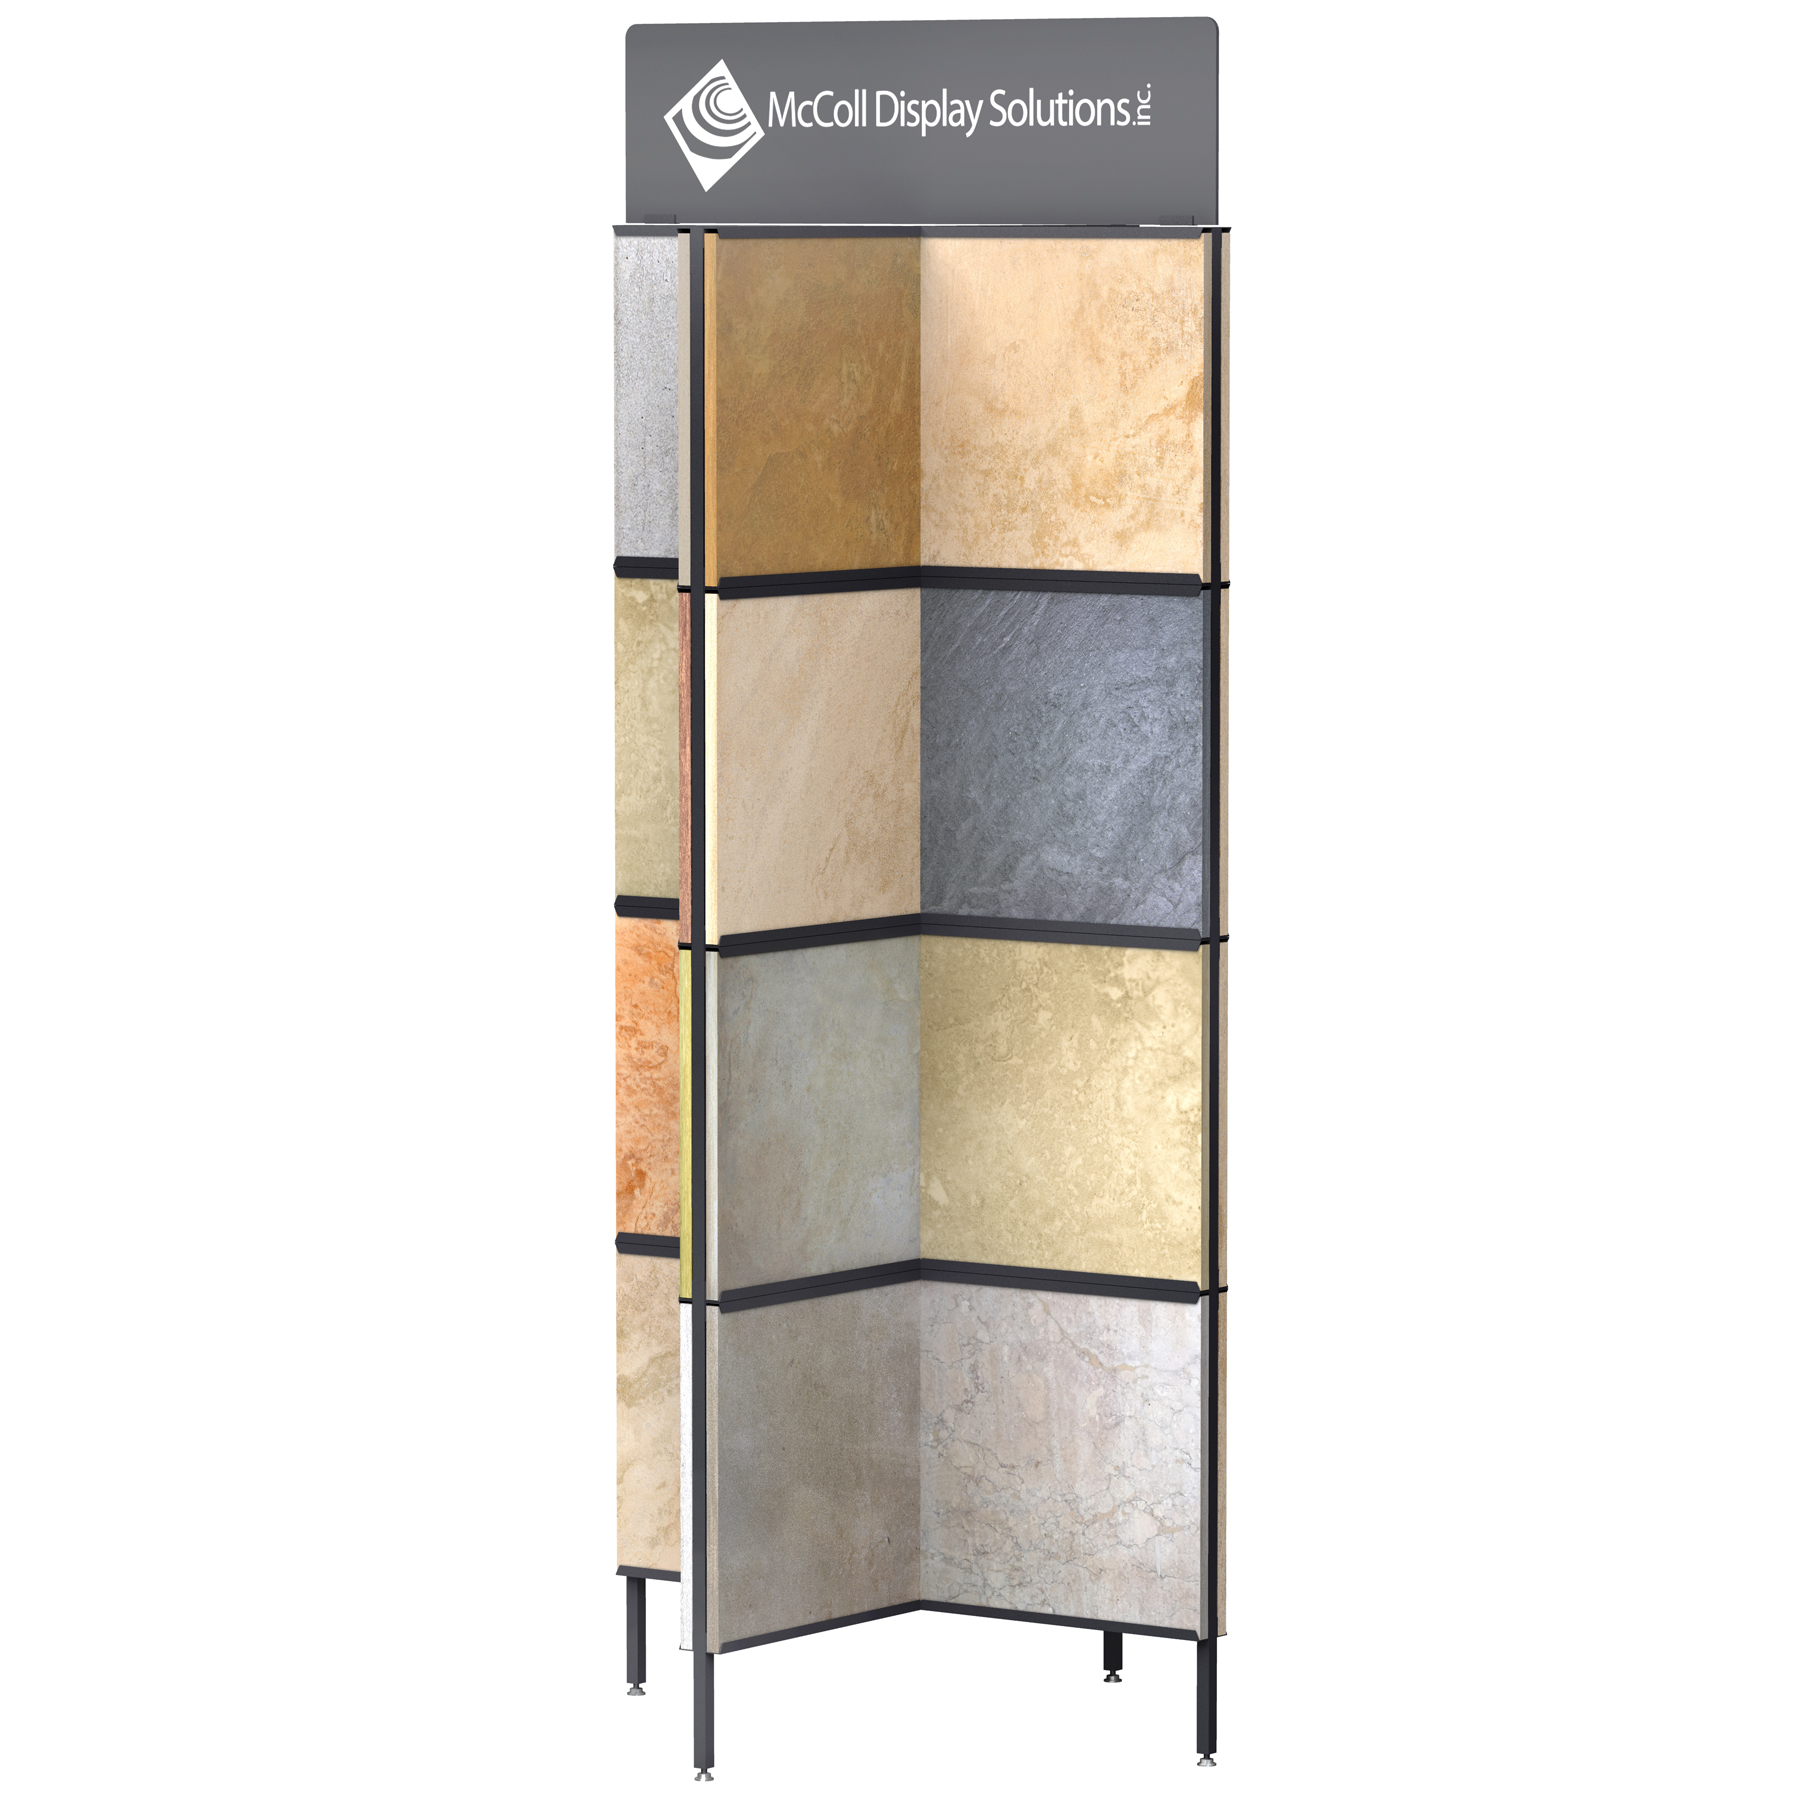 CD40 Tower Tile Stone Marble Quartz Travertine Sample System Showroom Displays McColl Display